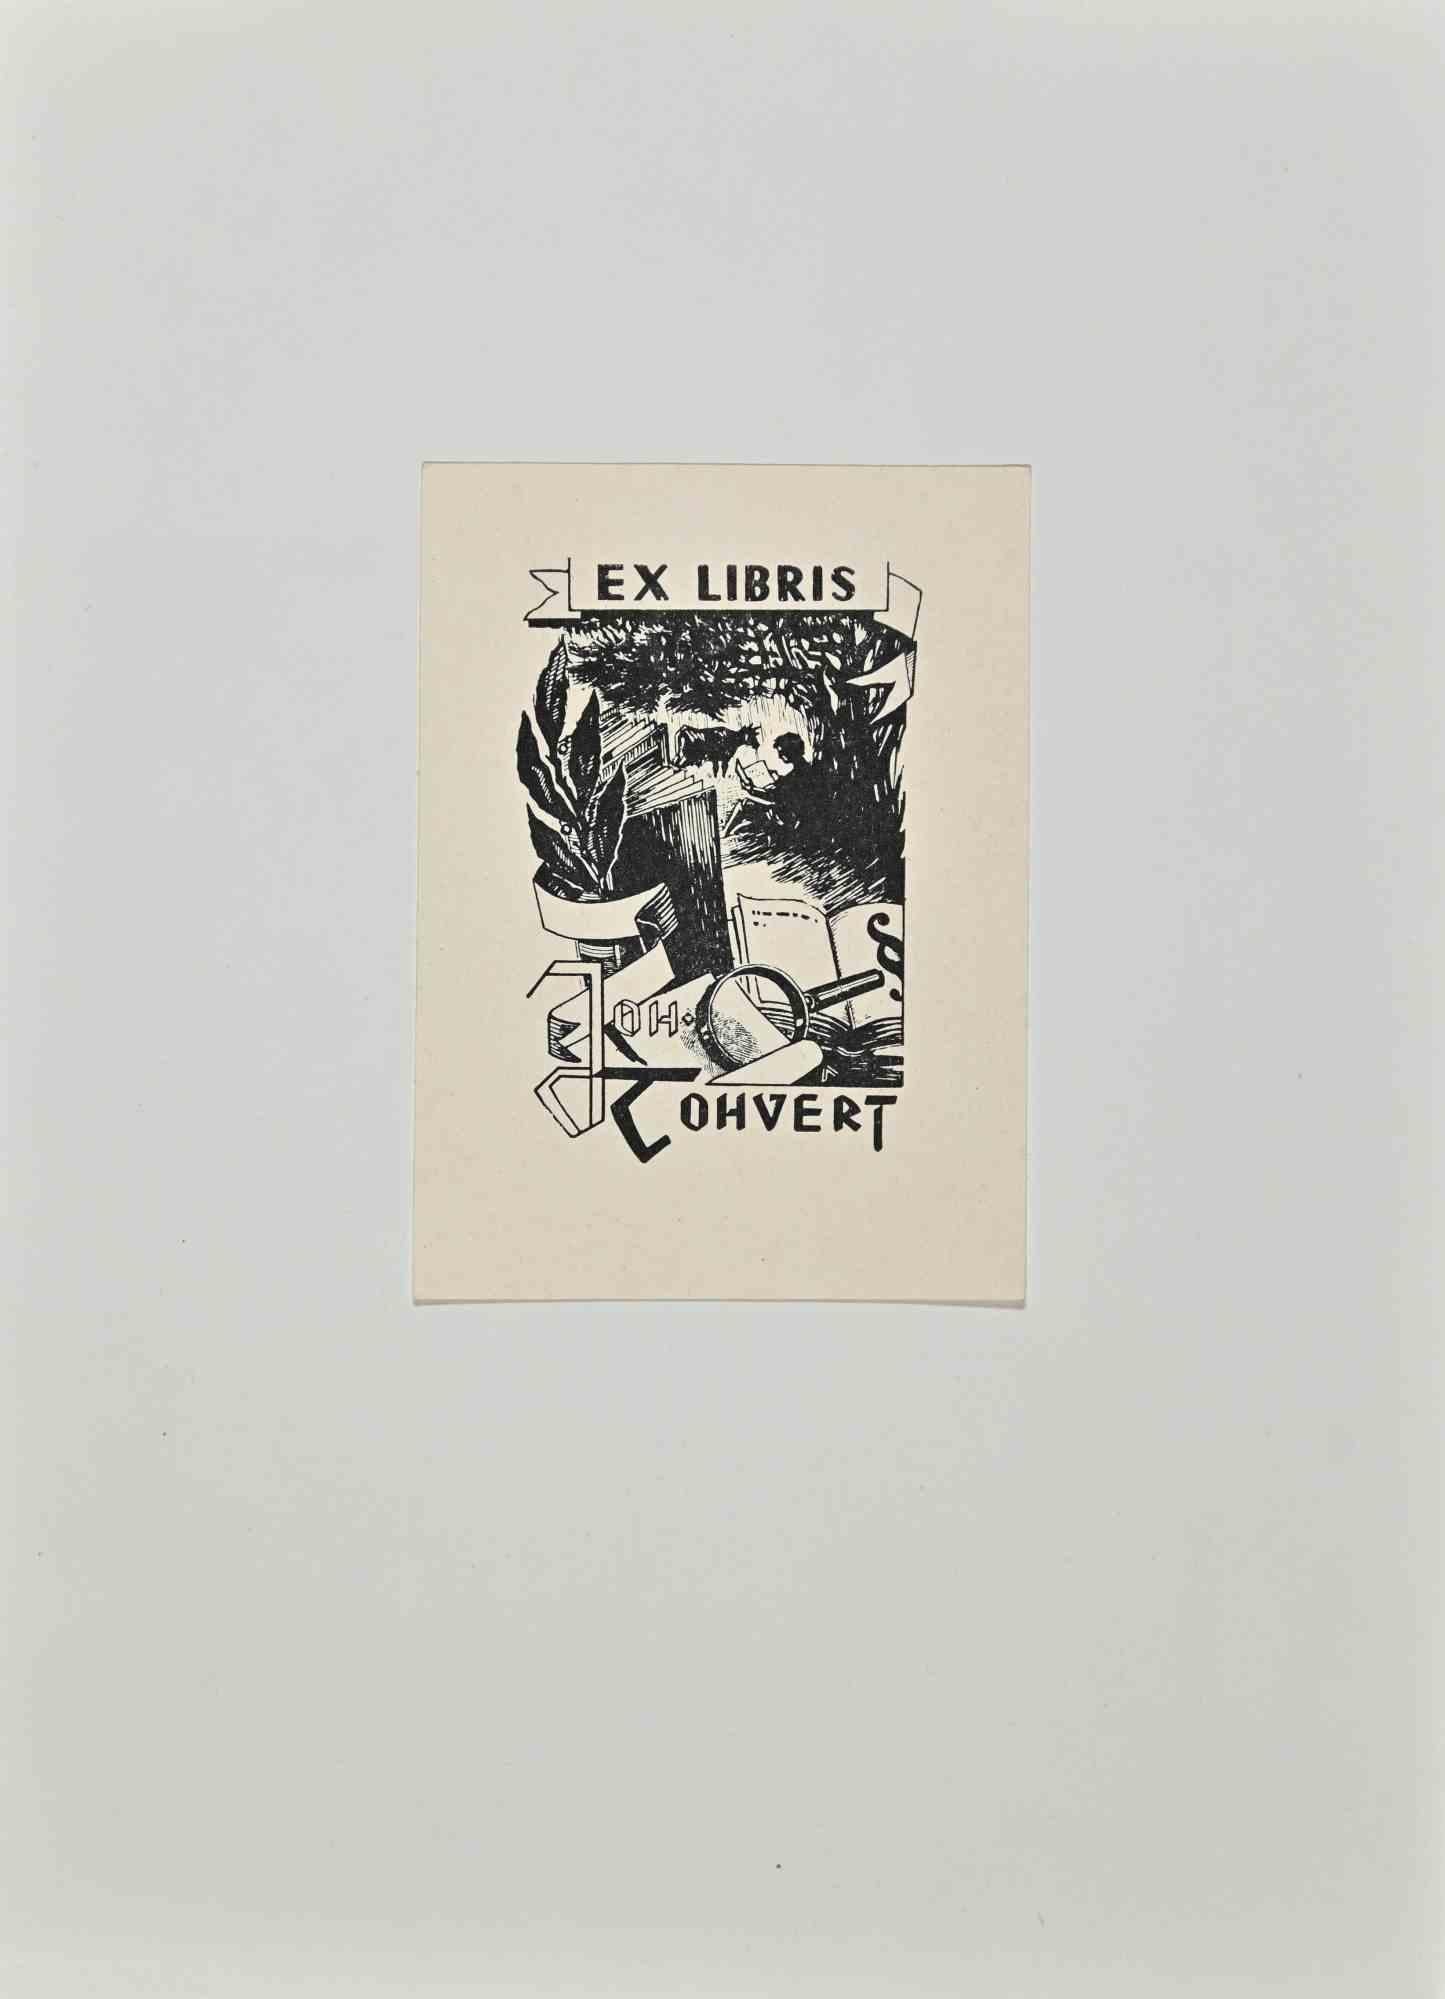  Ex Libris  - Joh Tohvert - Woodcut - Mid 20th Century